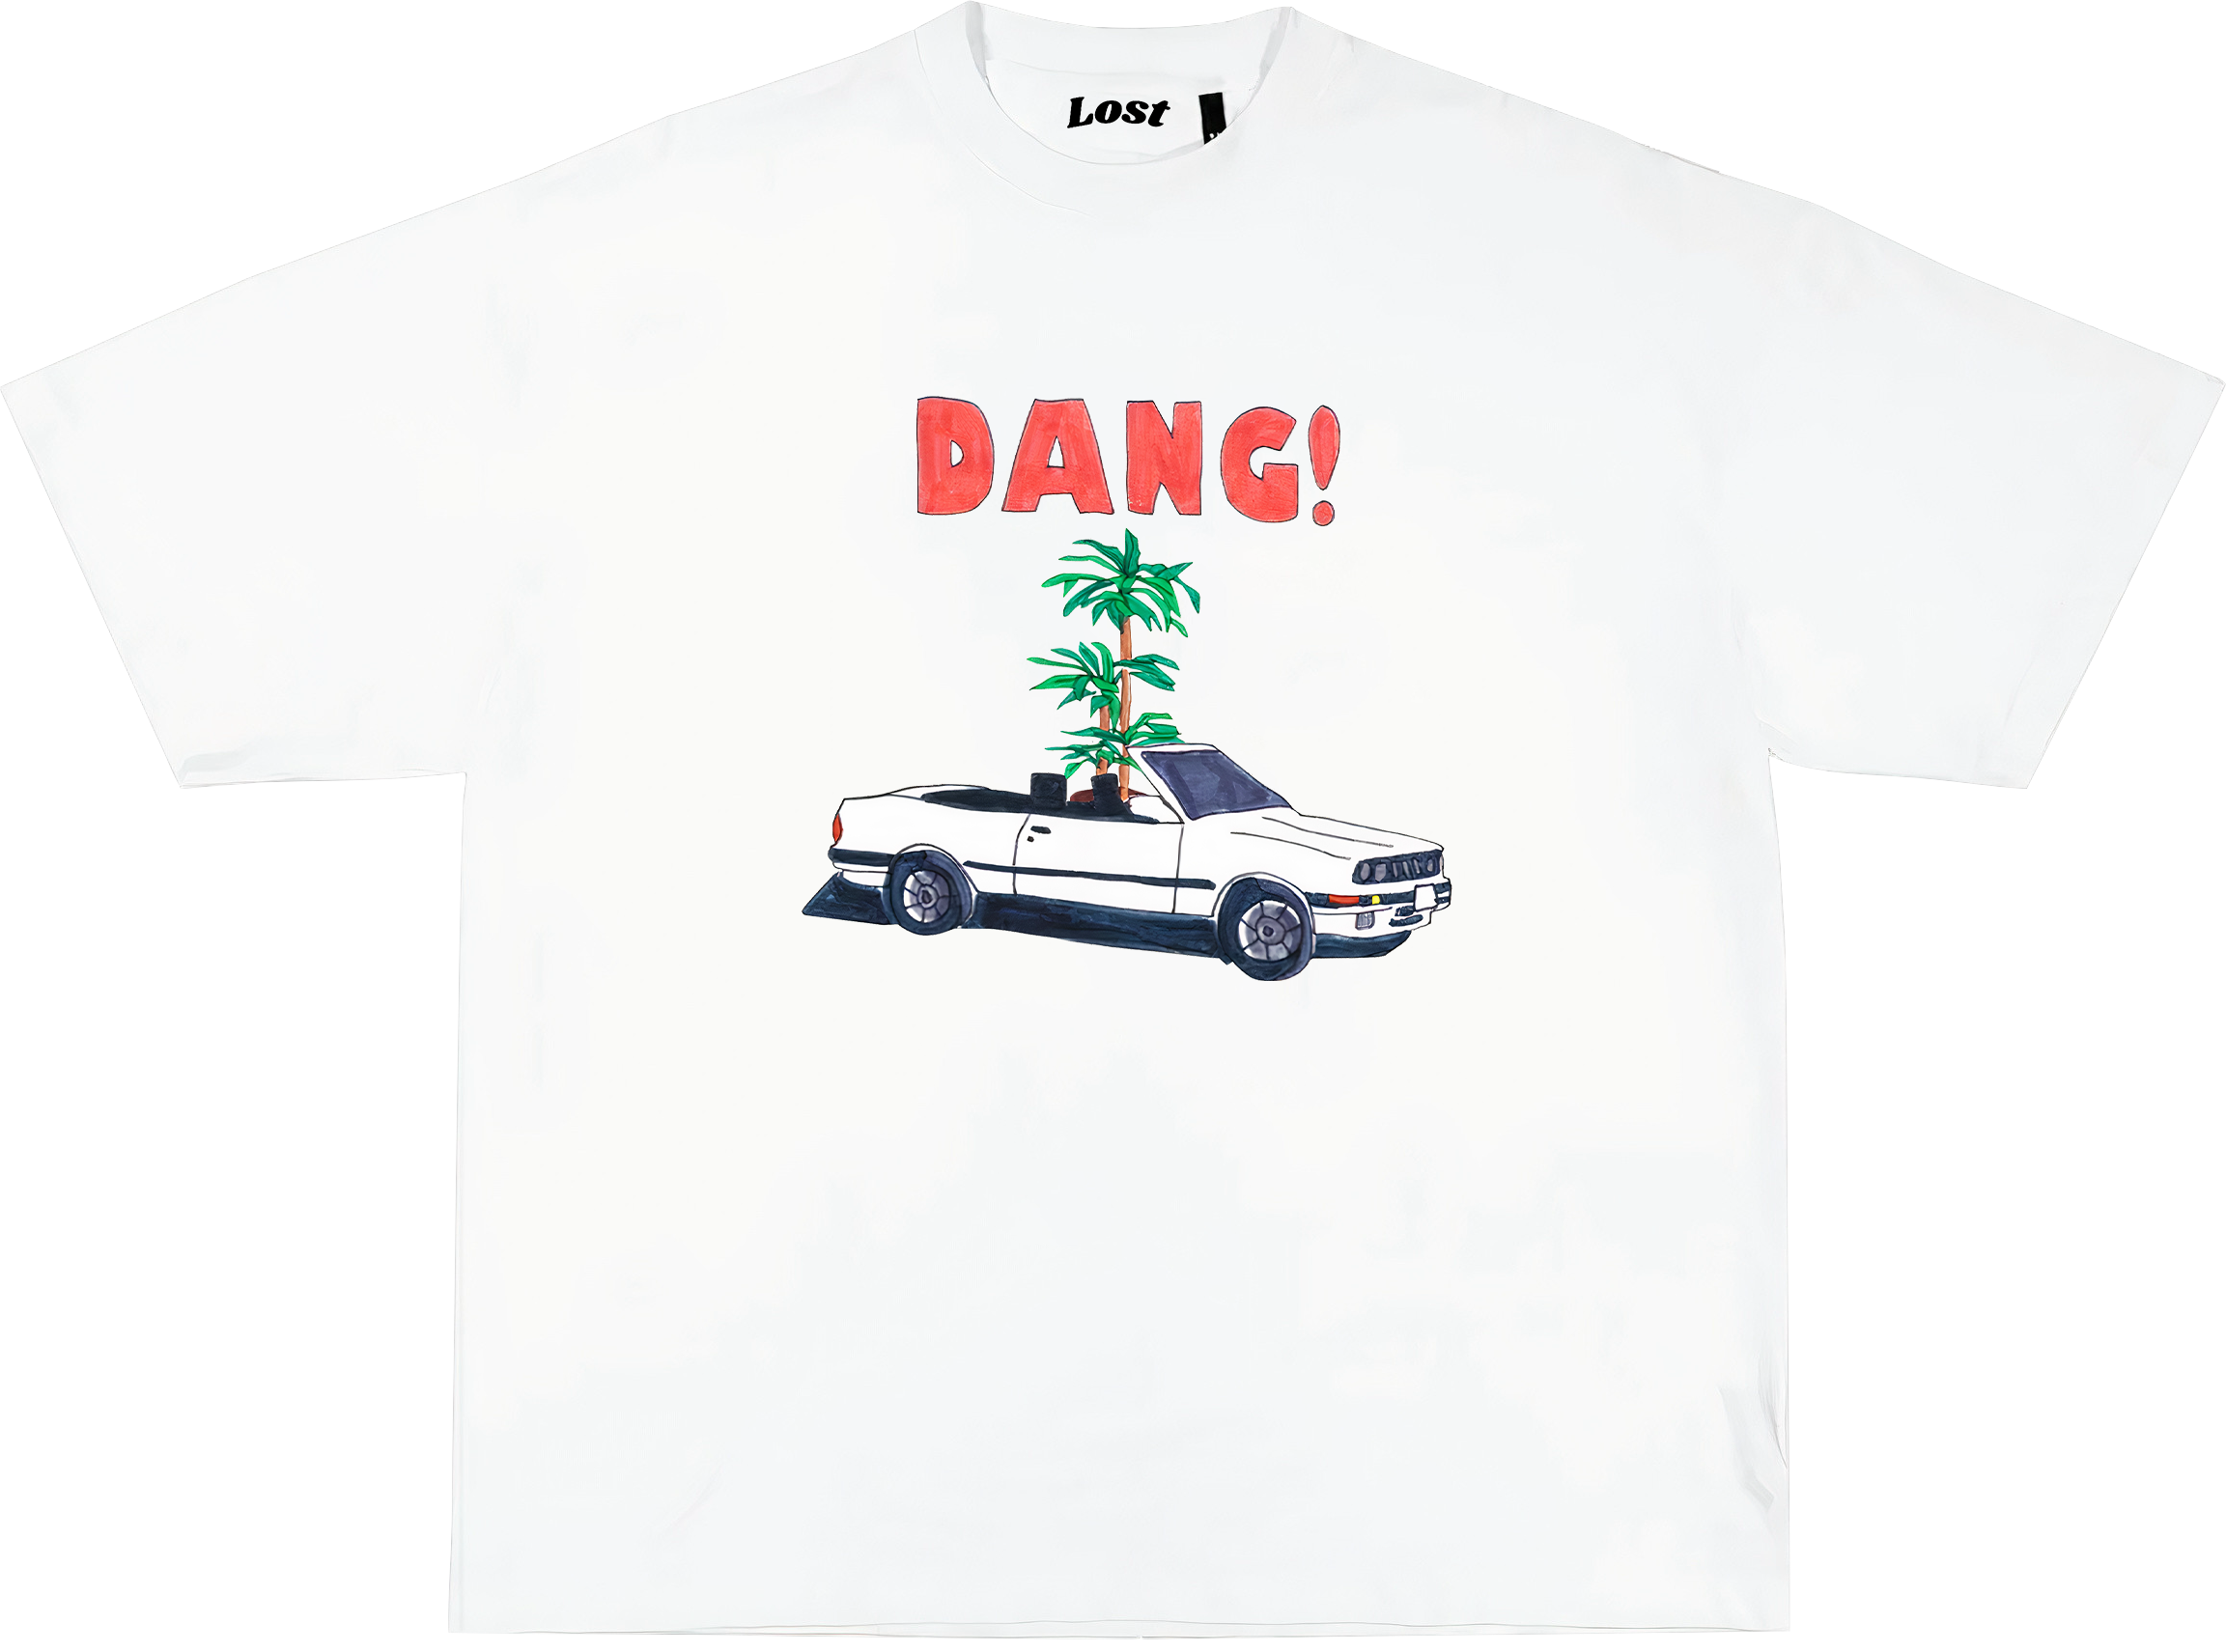 MAC MILLER "dang" Oversized T-shirt